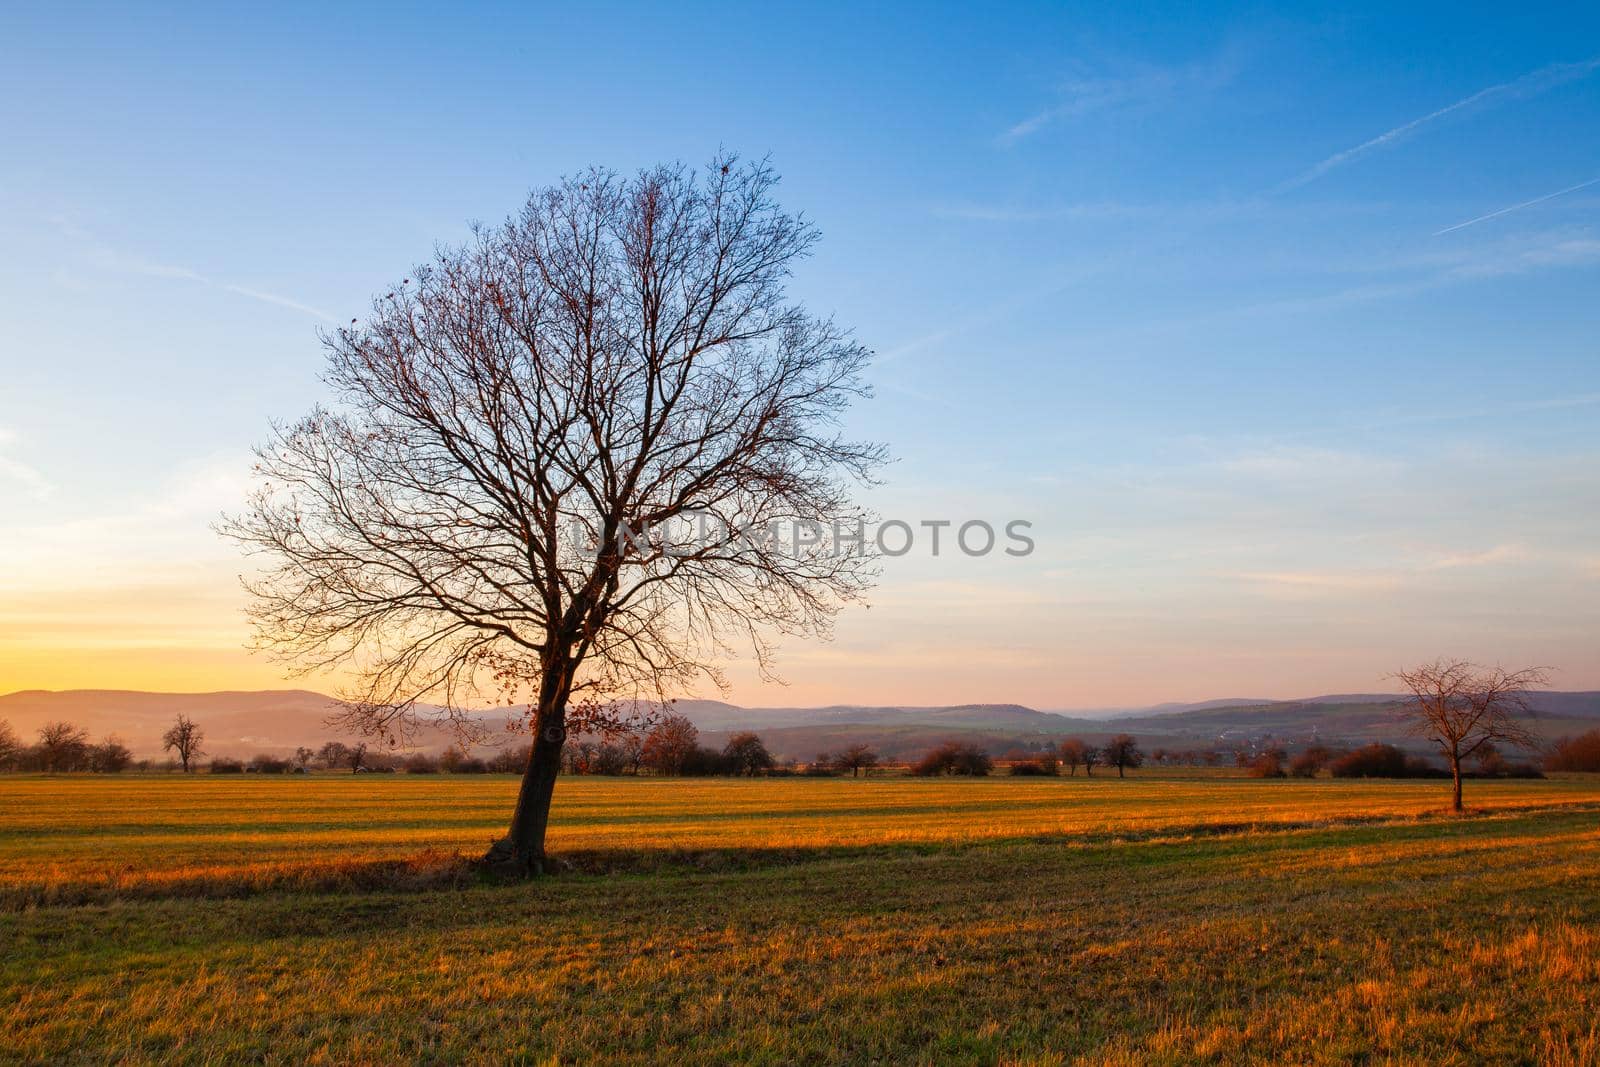 Lonely tree on the empty autumn field at sunset. Autumn landascape.